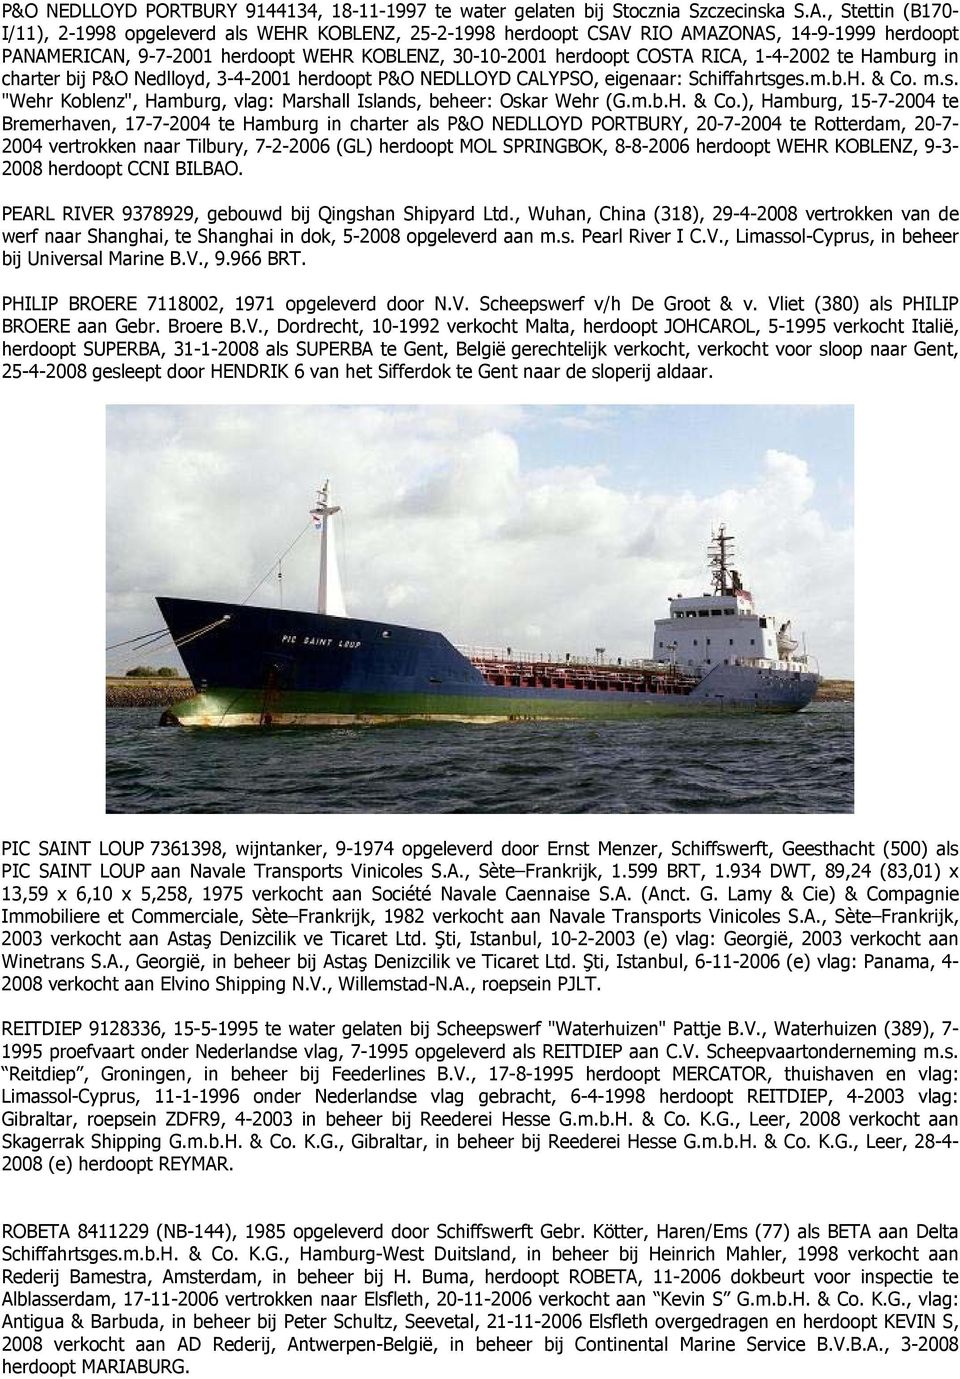 1-4-2002 te Hamburg in charter bij P&O Nedlloyd, 3-4-2001 herdoopt P&O NEDLLOYD CALYPSO, eigenaar: Schiffahrtsges.m.b.H. & Co. m.s. "Wehr Koblenz", Hamburg, vlag: Marshall Islands, beheer: Oskar Wehr (G.